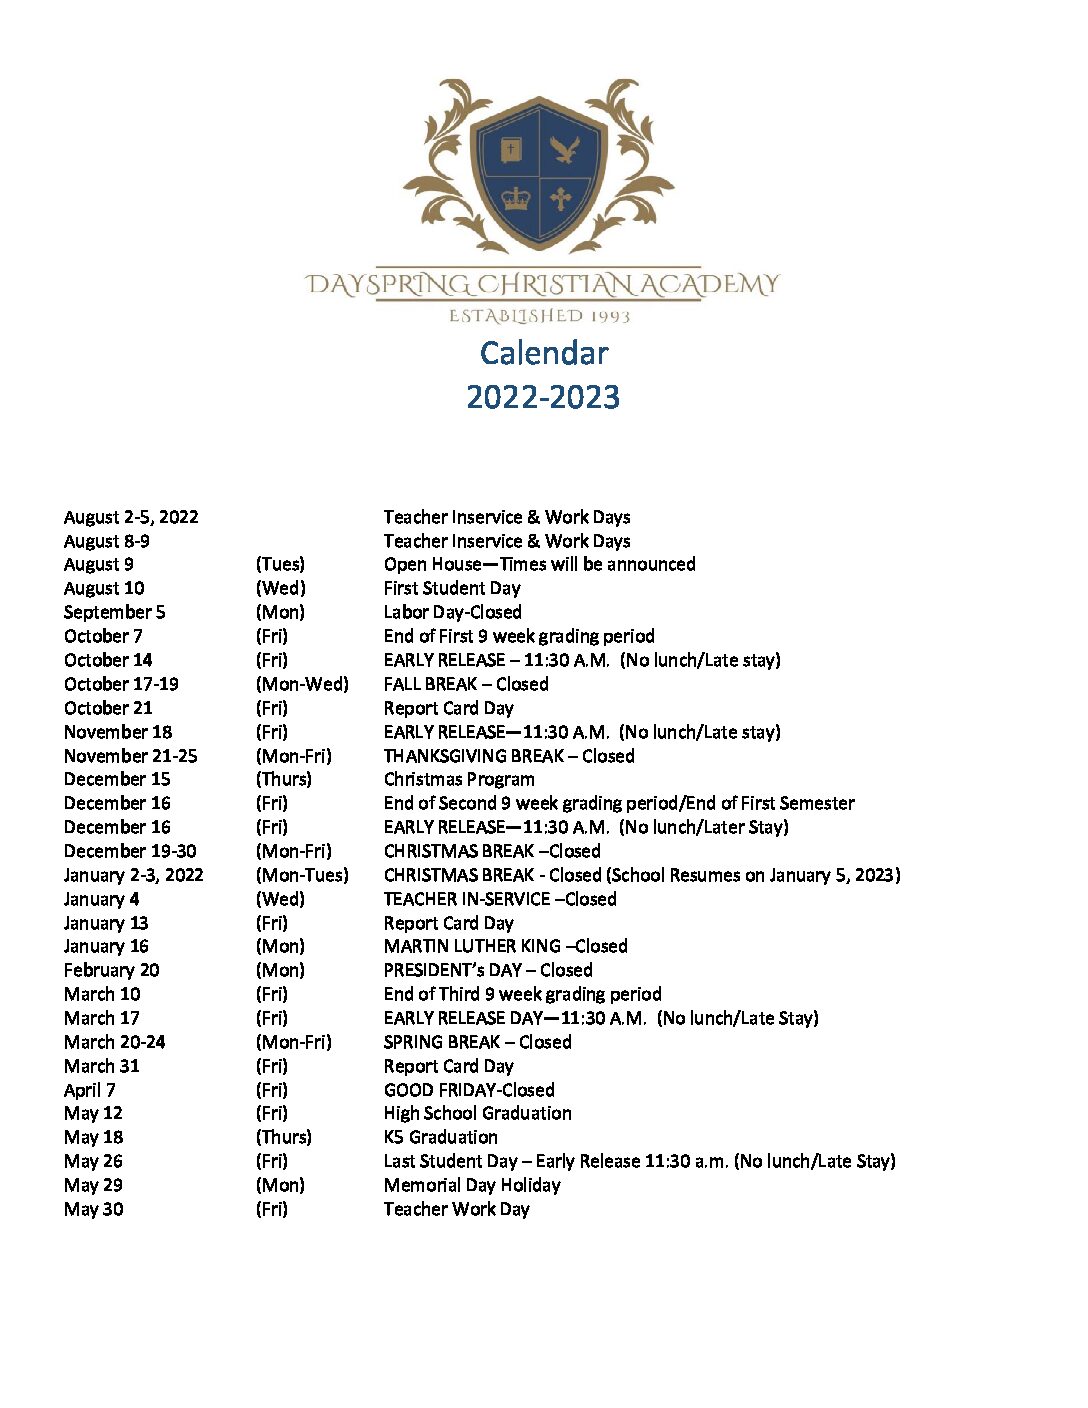 Calendar 2022-2023 Academic – Dayspring Christian Academy